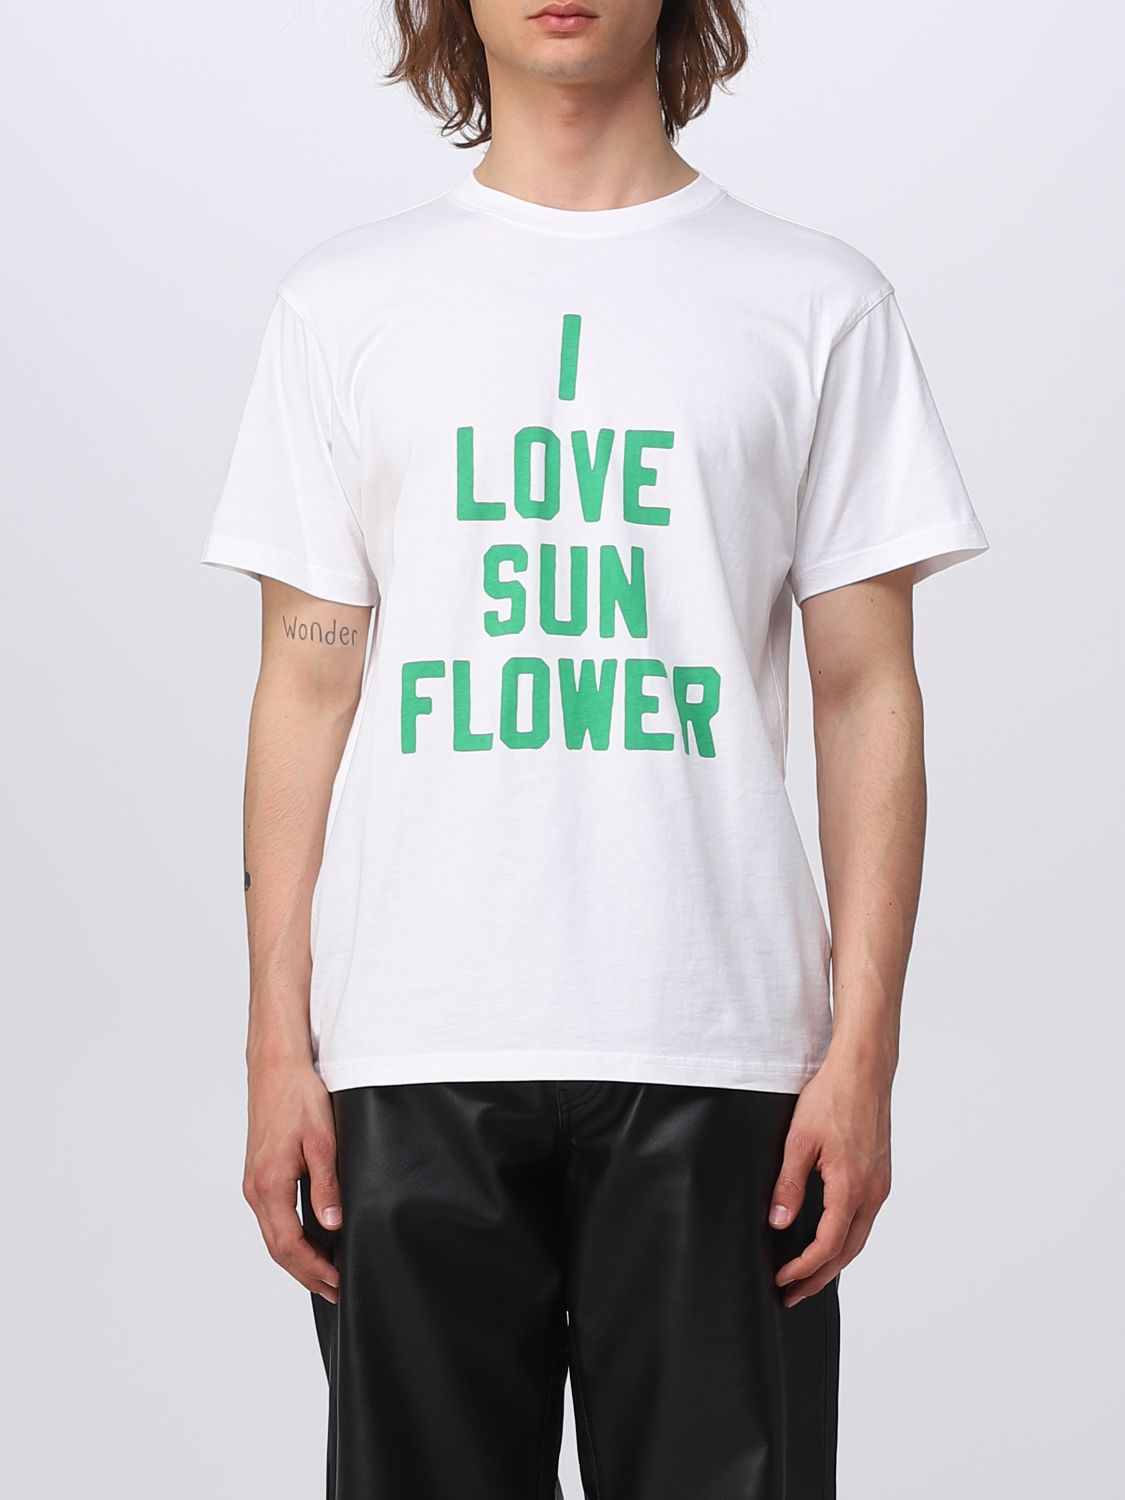 Sunflower t-shirt for man